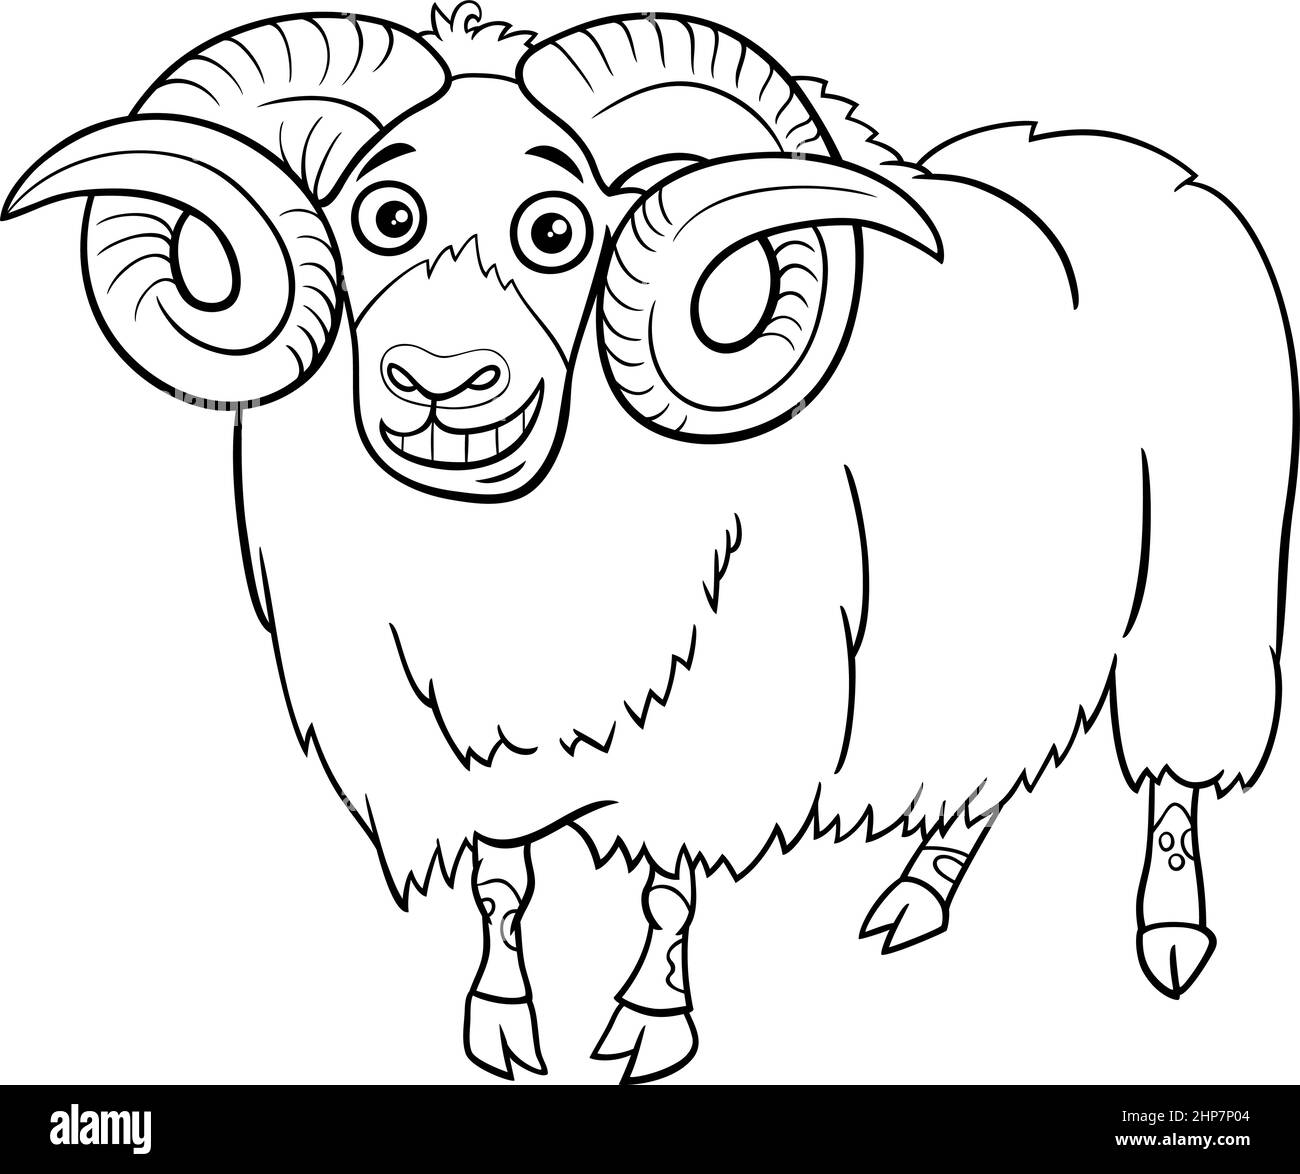 ram farm animal cartoon character coloring book page Stock Vector